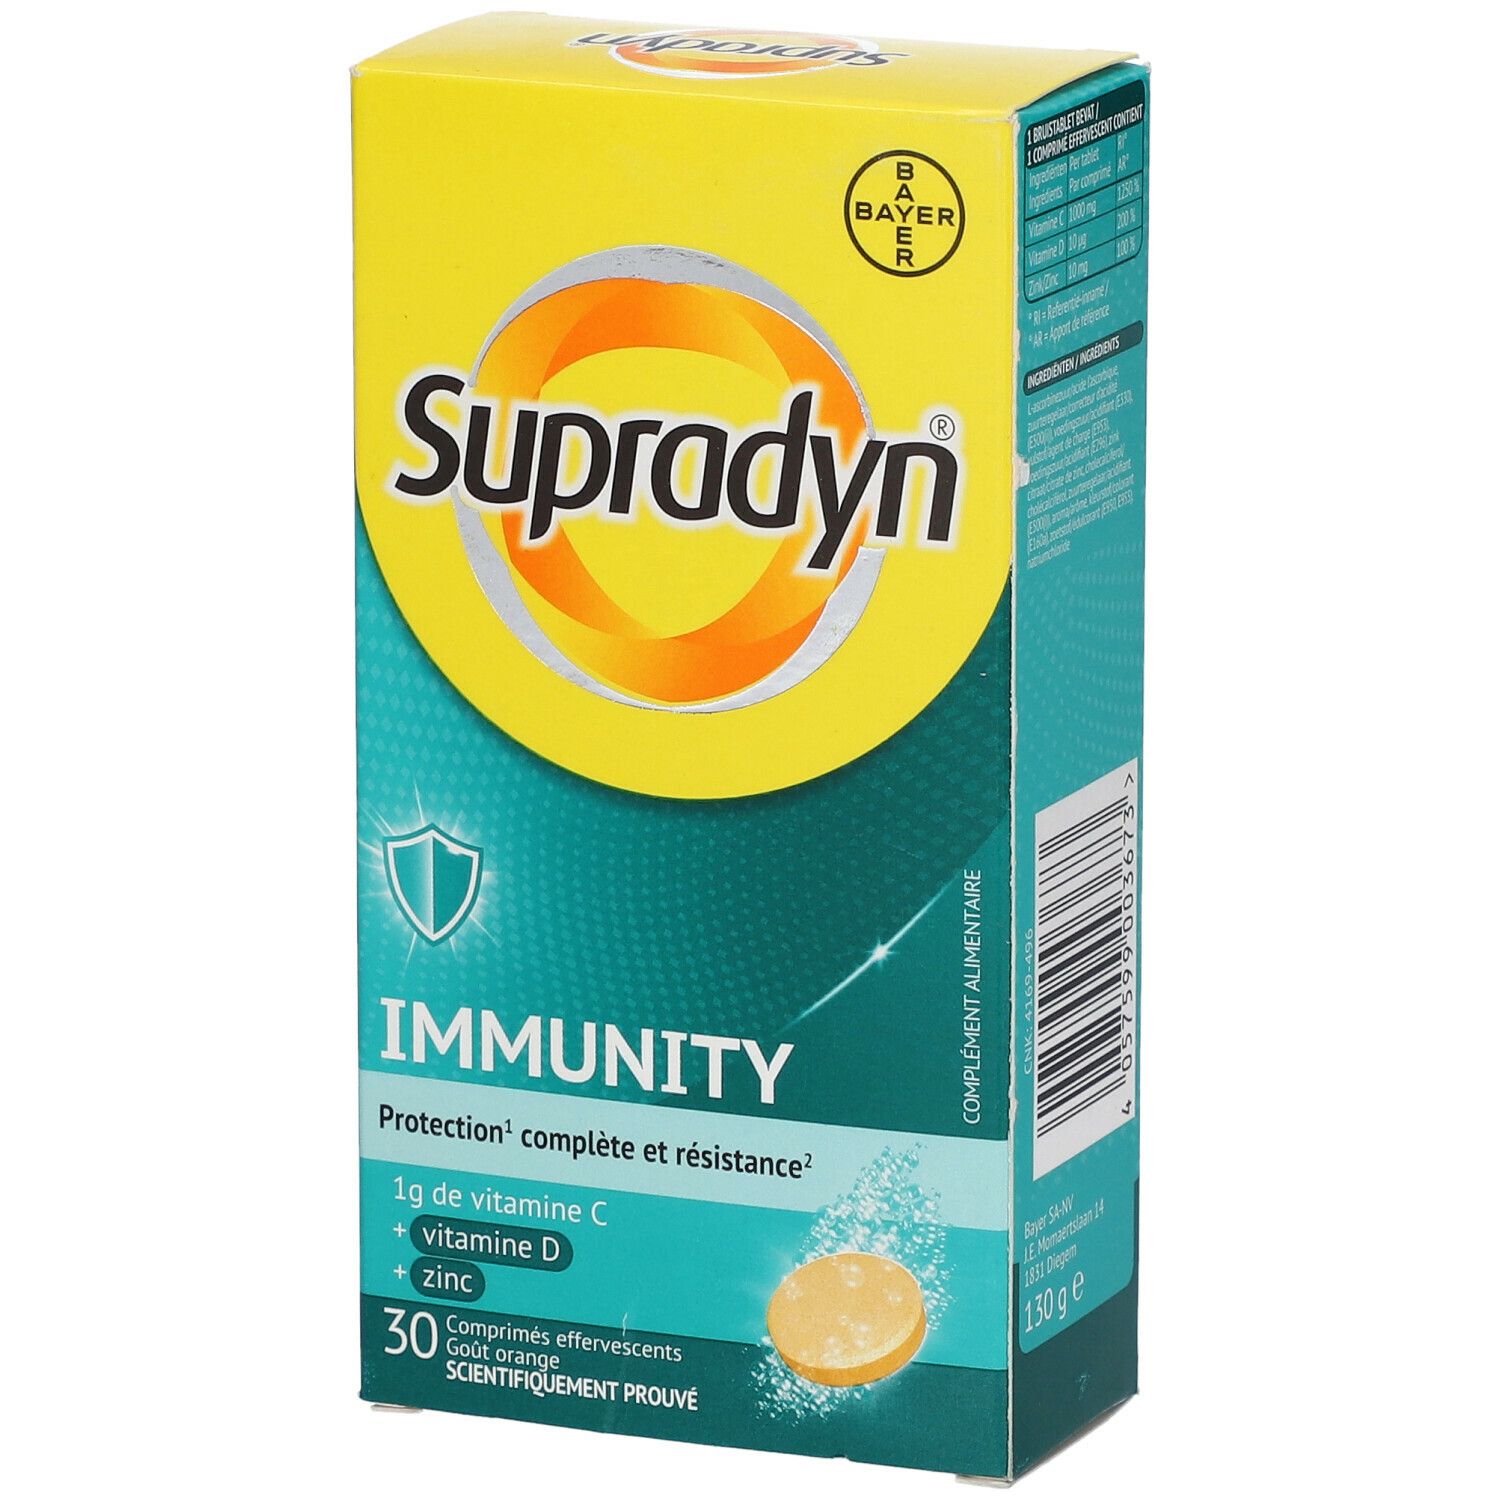 Supradyn® Immunity - Immunité, Vitamine C & D, Zinc